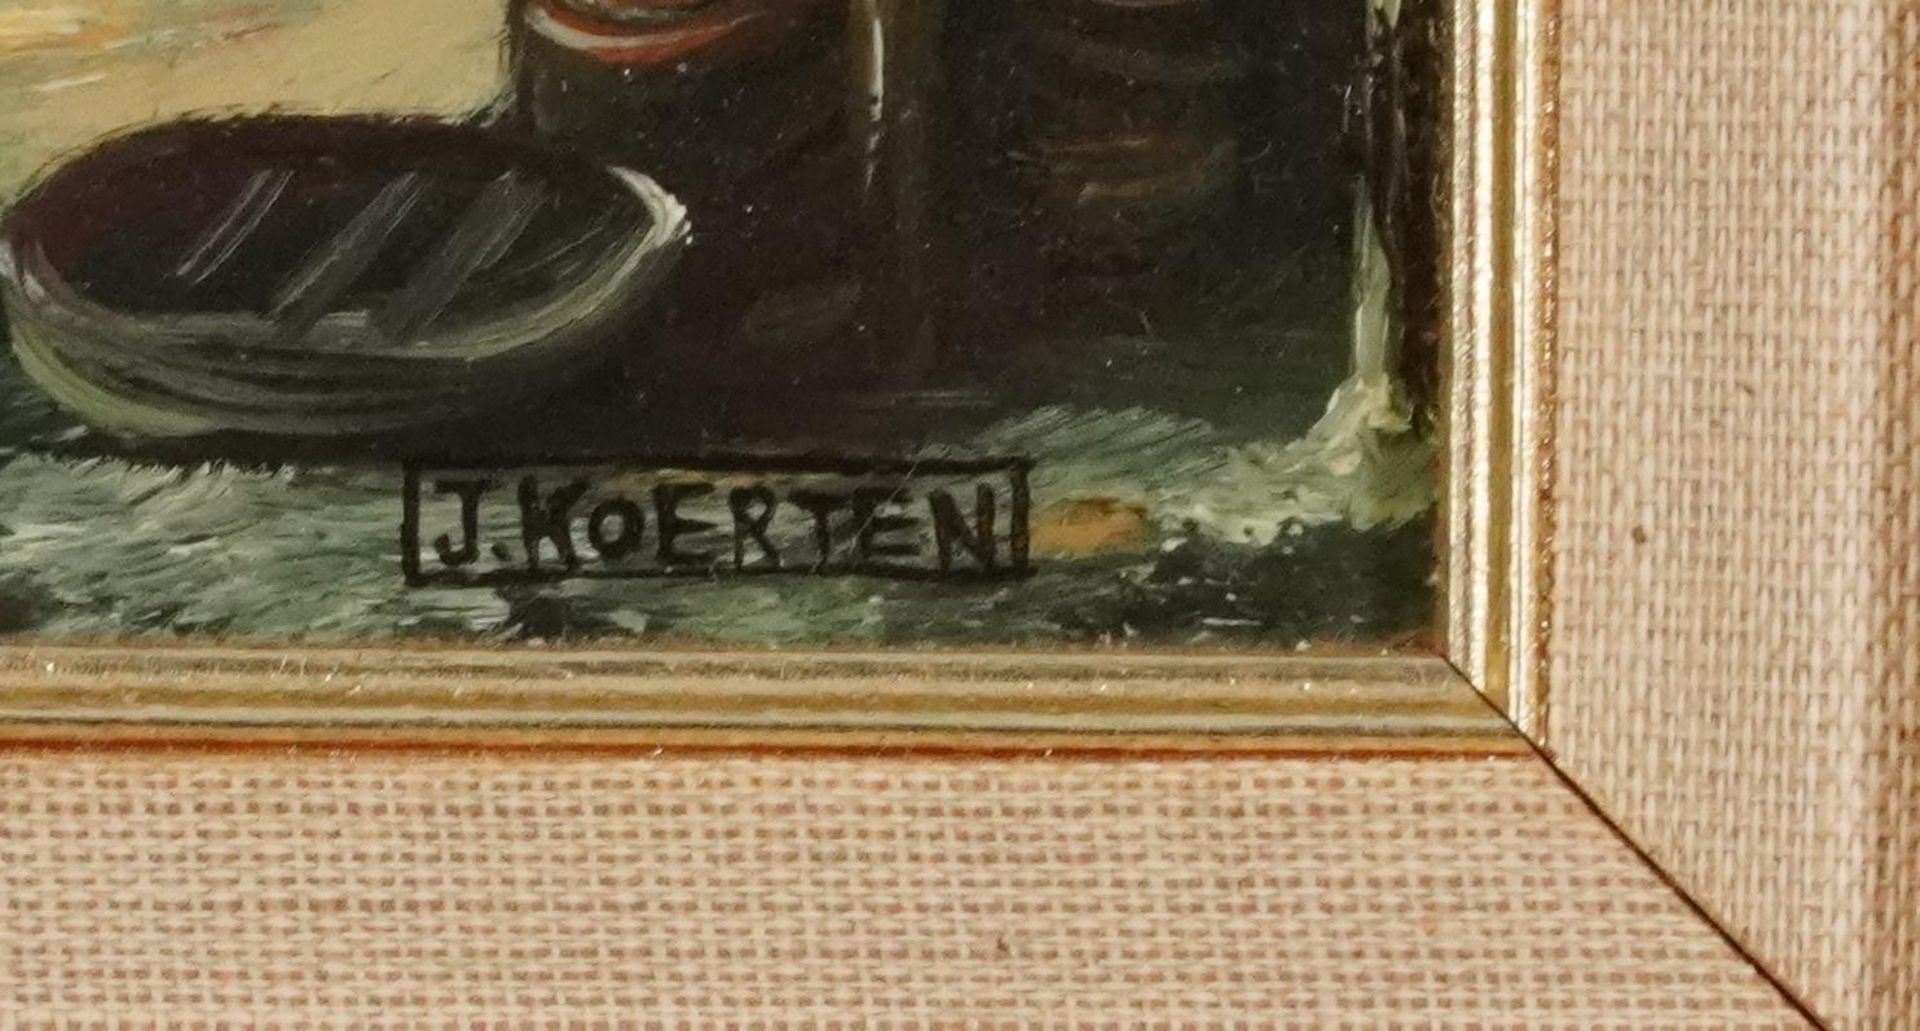 J Coerten - Winter street scene, Old Master style oil on wood panel, mounted and framed, 29cm x 23cm - Image 3 of 6